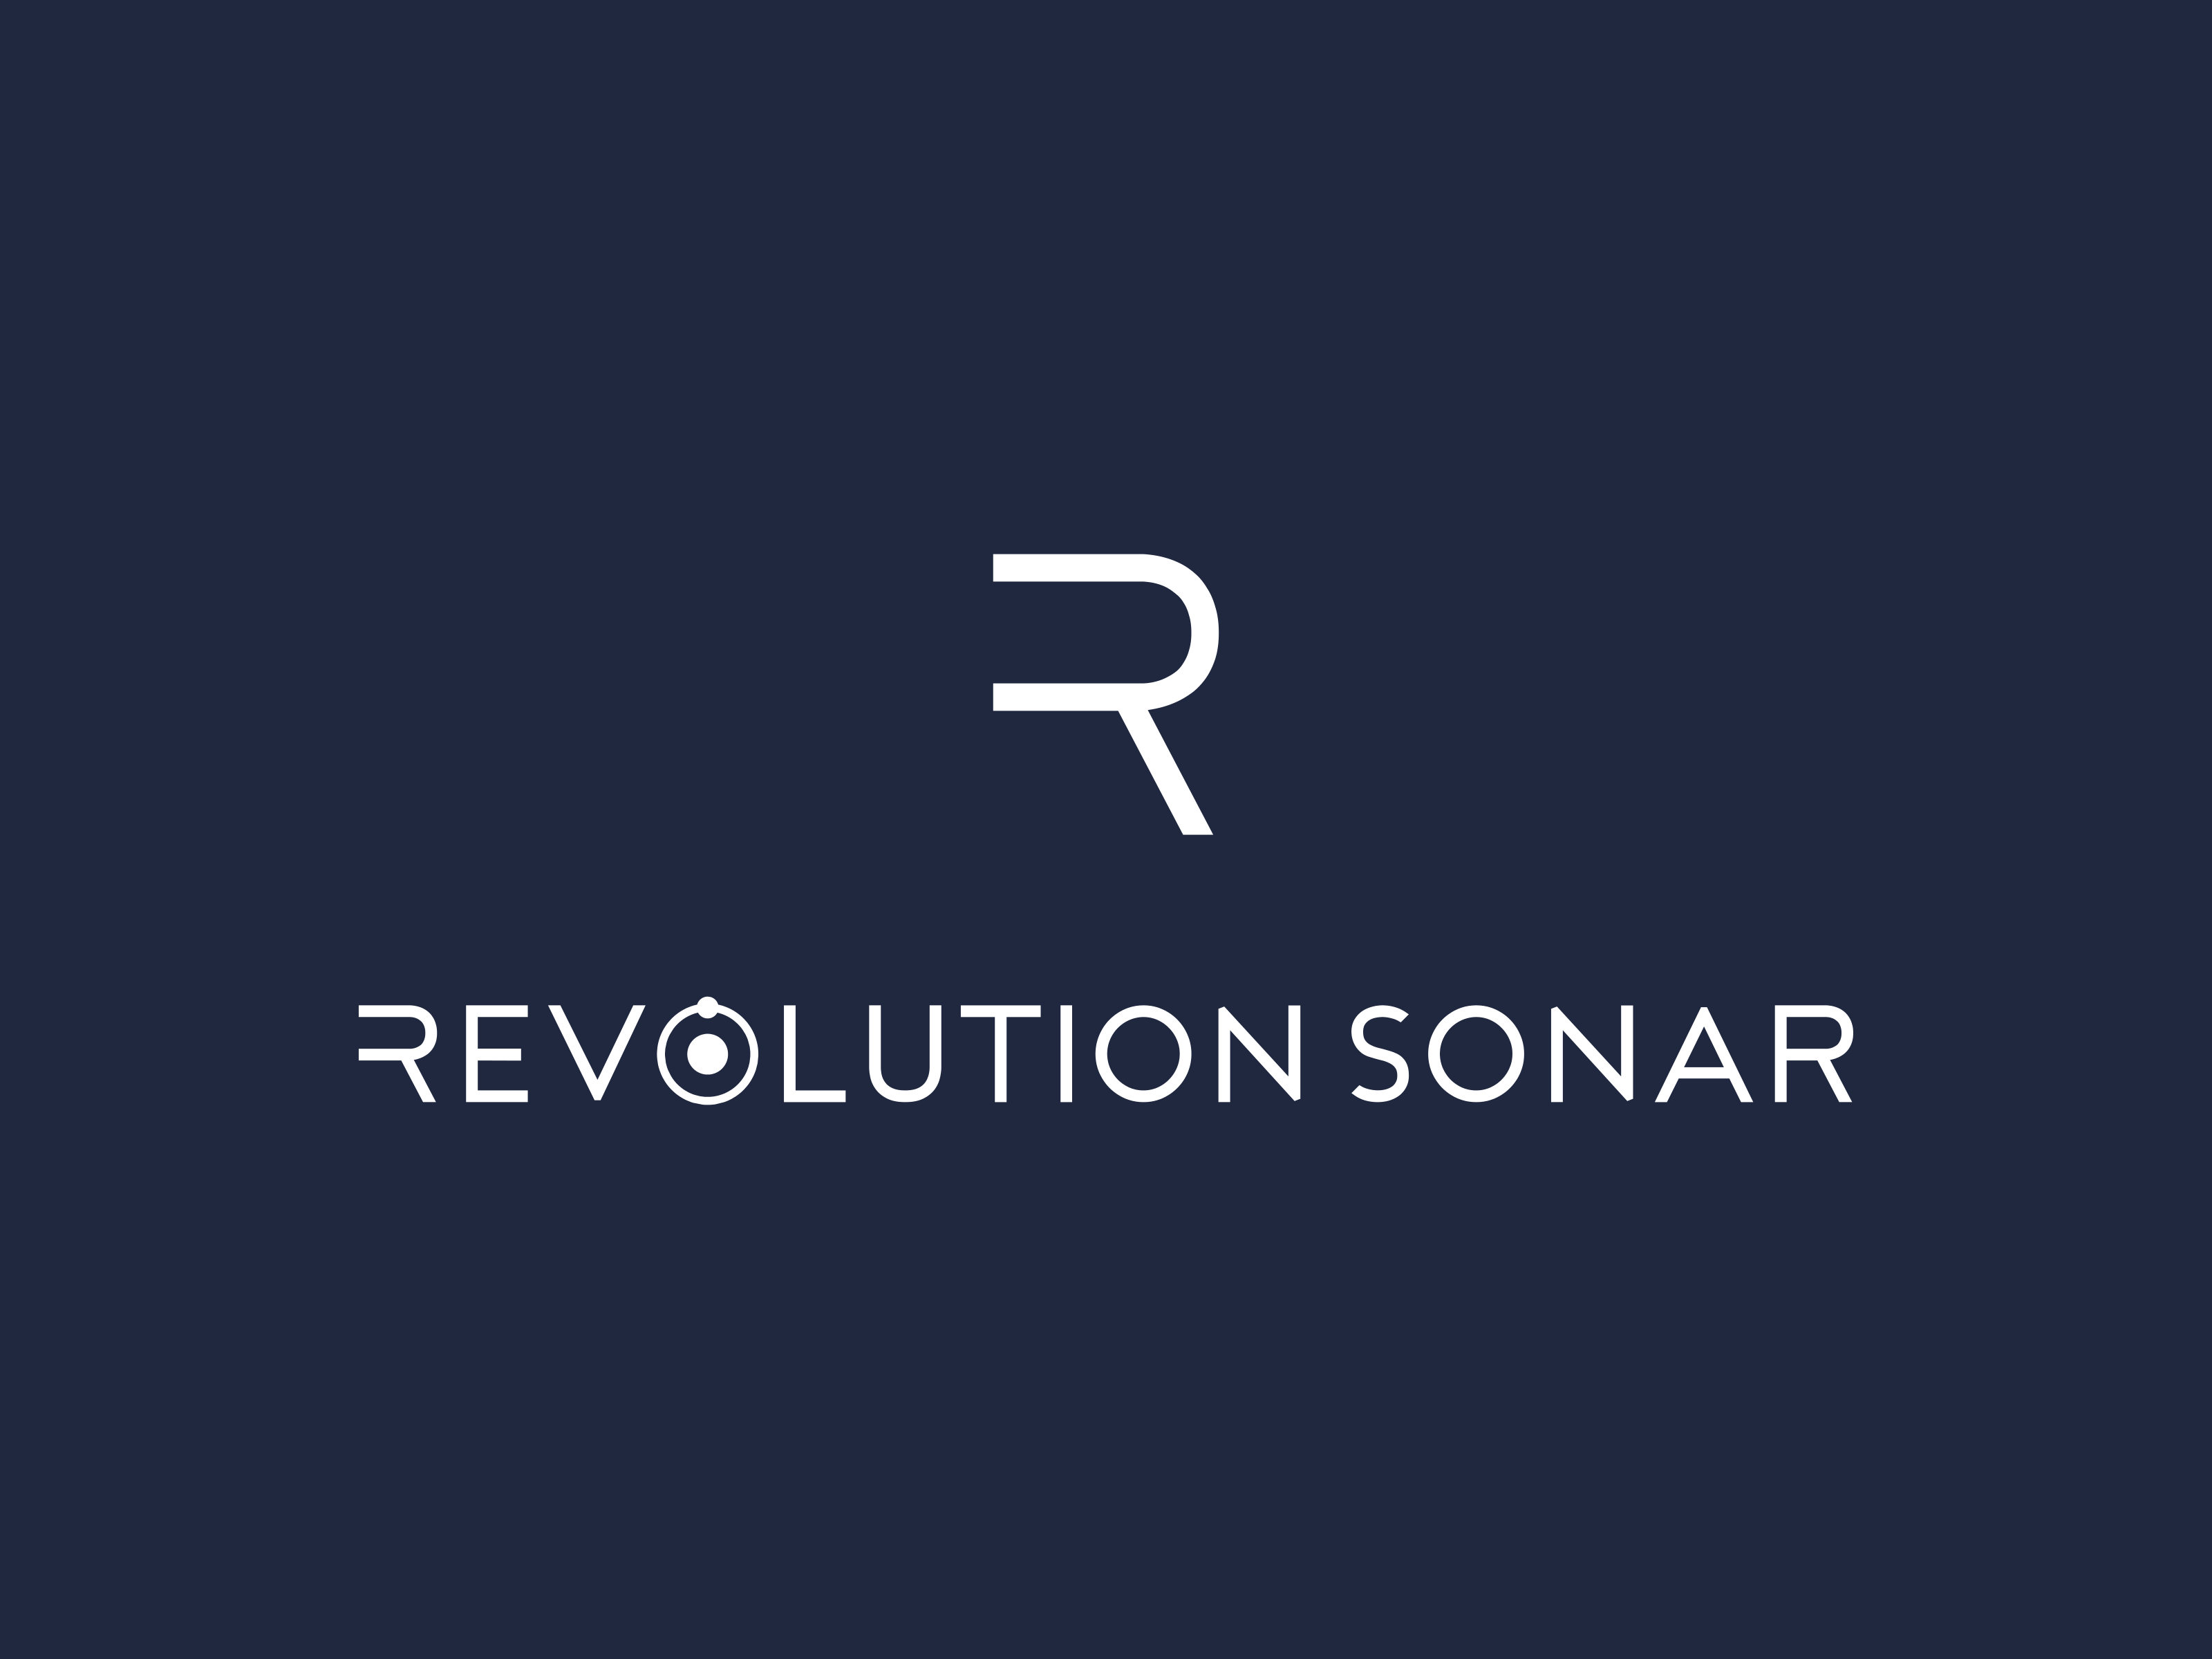 Sonar - Buy Premade Readymade Logos for Sale